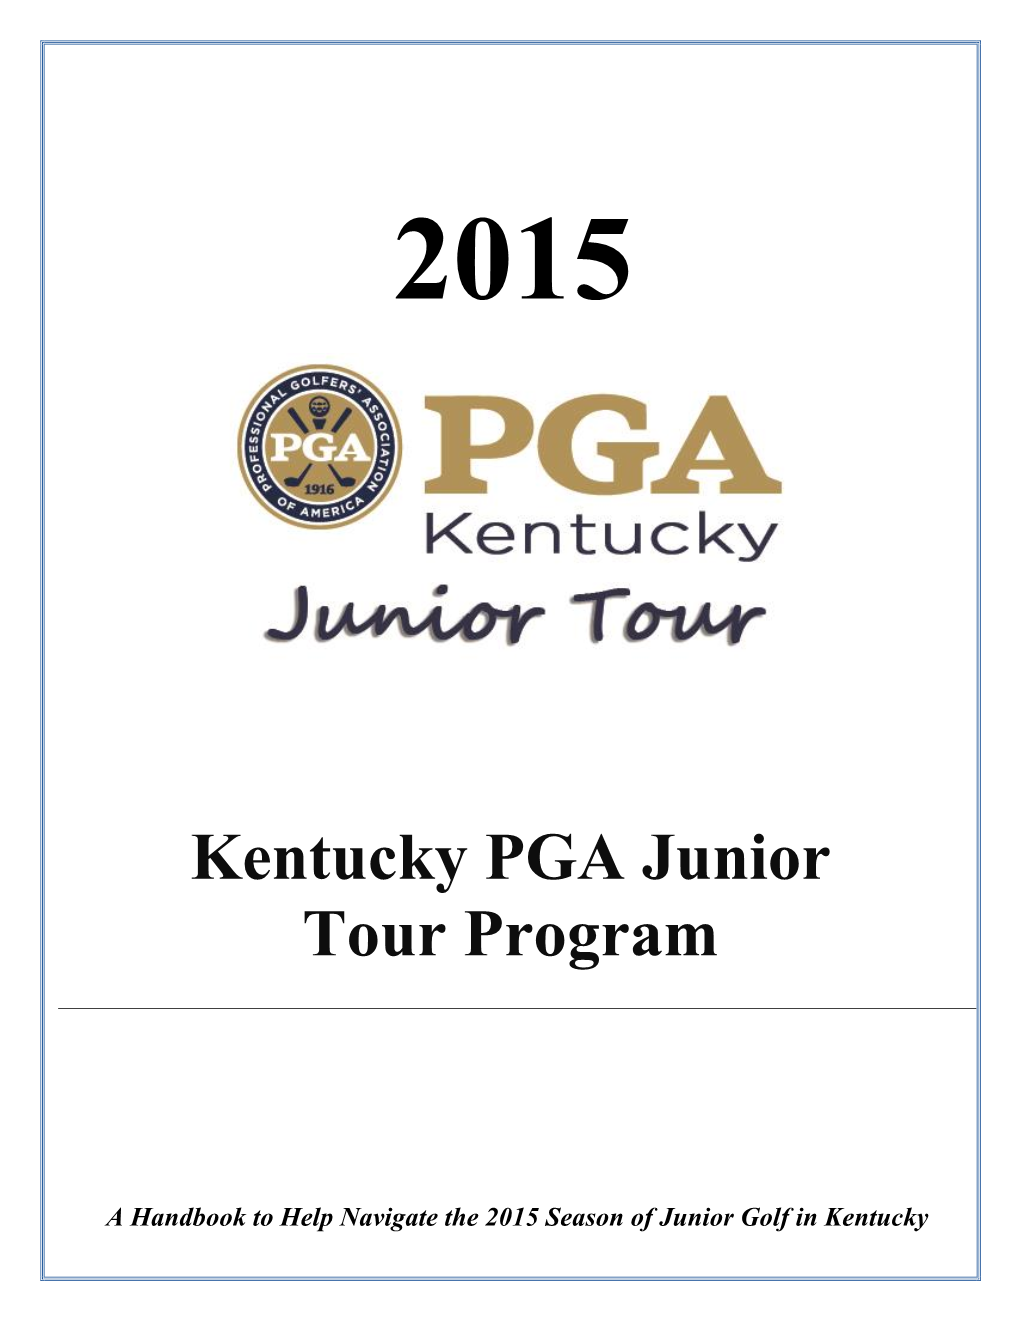 Kentucky PGA Junior Tour Program